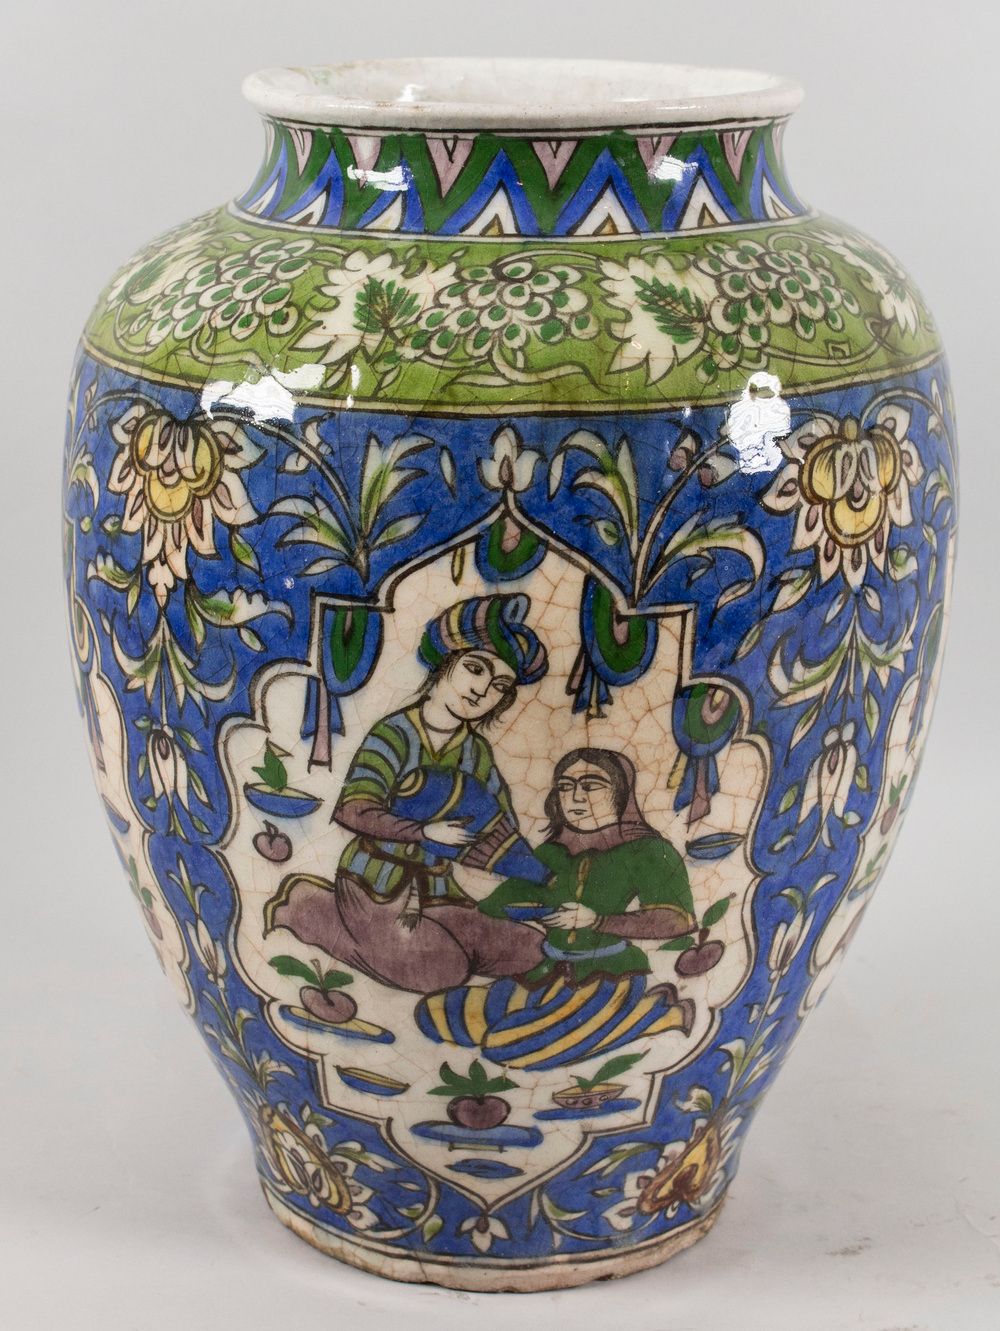 Große Qajar Vase / A large Qajar vase, Persien, 19. Jh. 材料：陶瓷，上釉，釉下多彩绘画、
标记：无标记、&hellip;